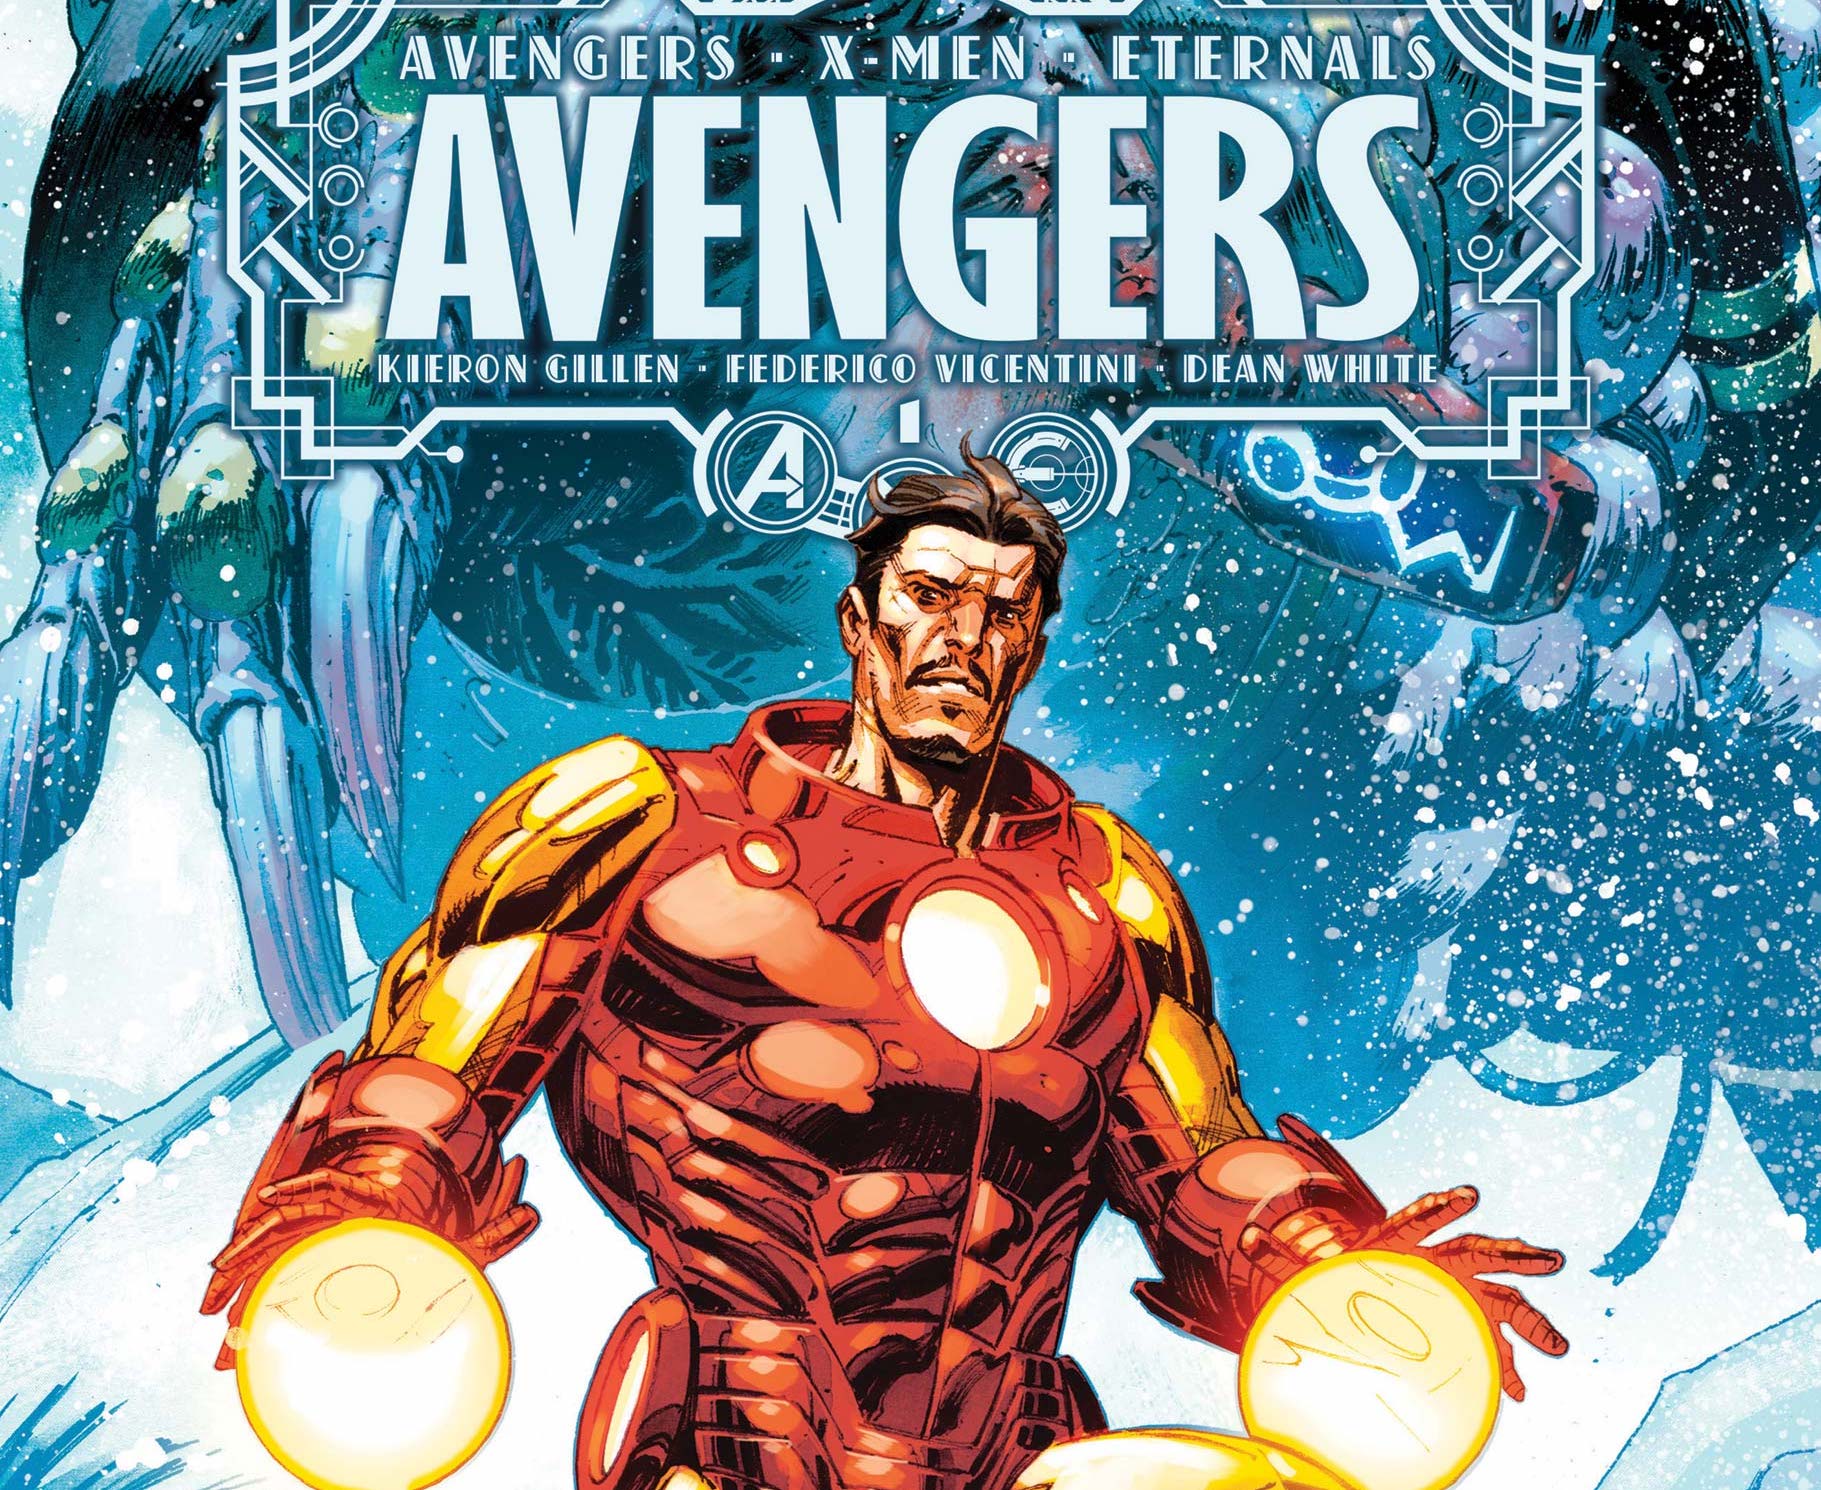 'A.X.E.: Avengers' #1 thoroughly explores Tony Stark as a person